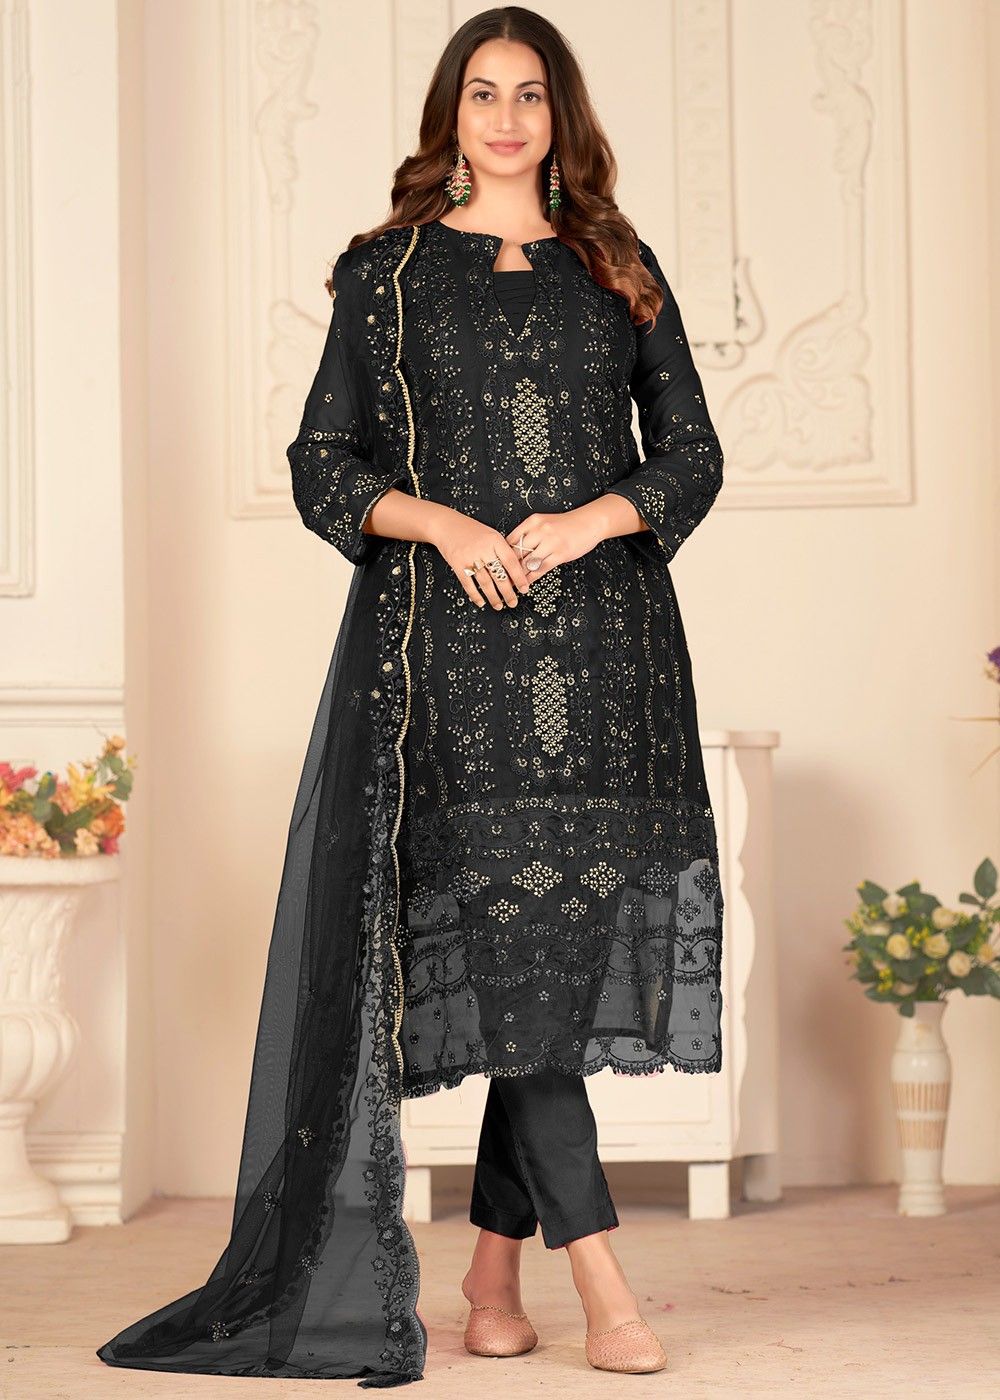 Black Colour Designer Salwar Suit in Georgette Fabric.